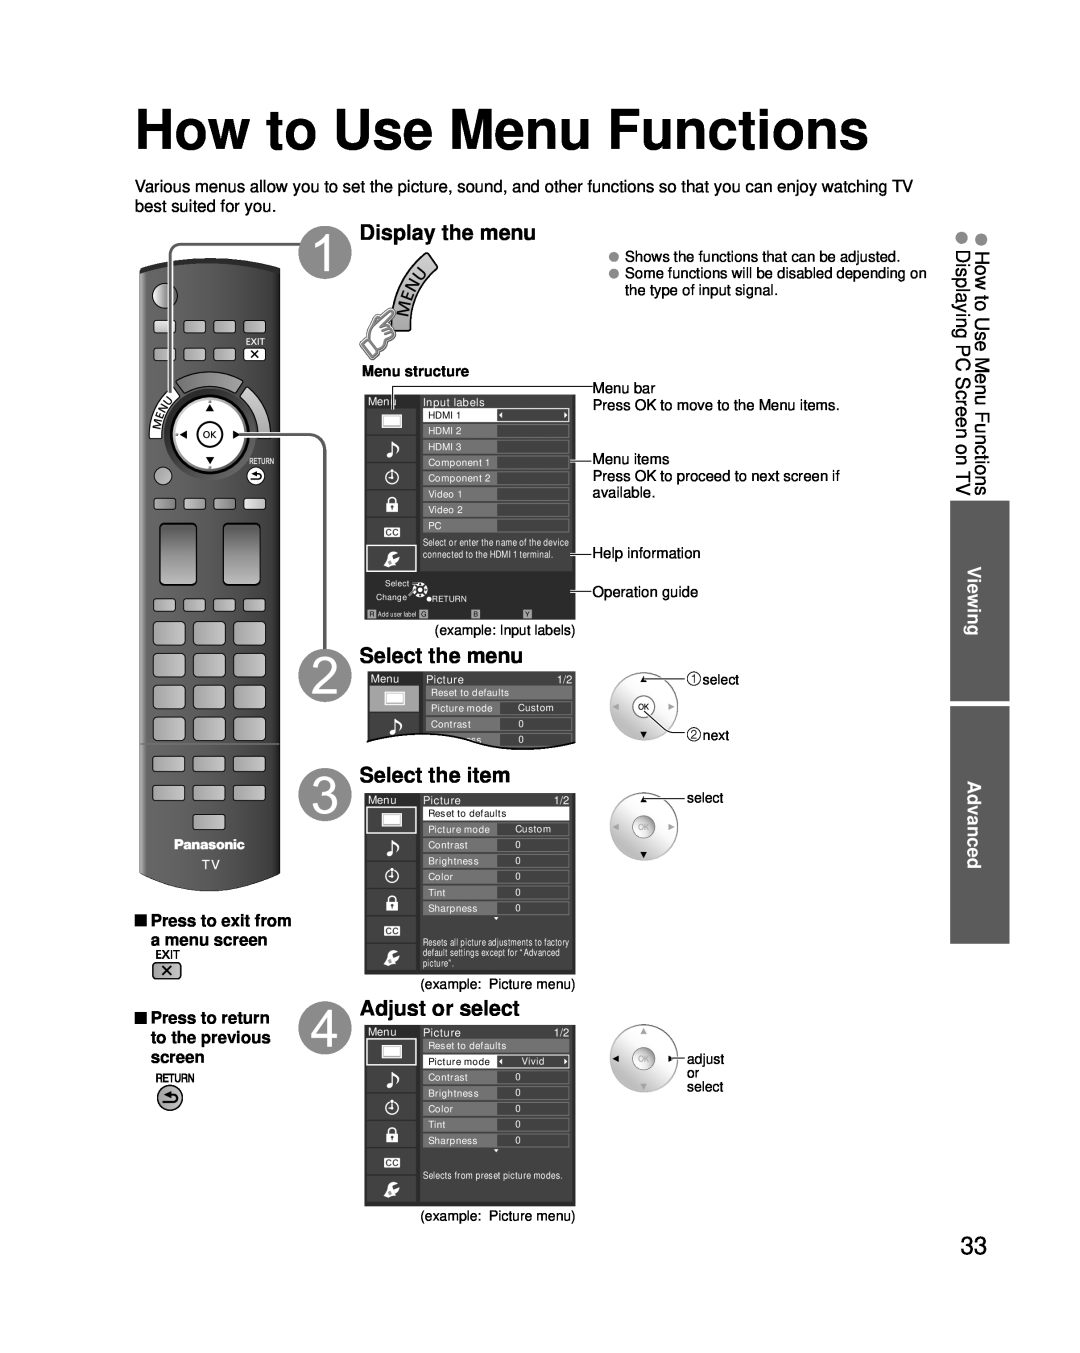 Panasonic TC-P46G25 How to Use Menu Functions, Select the menu, Select the item, Adjust or select, Advanced, a menu screen 